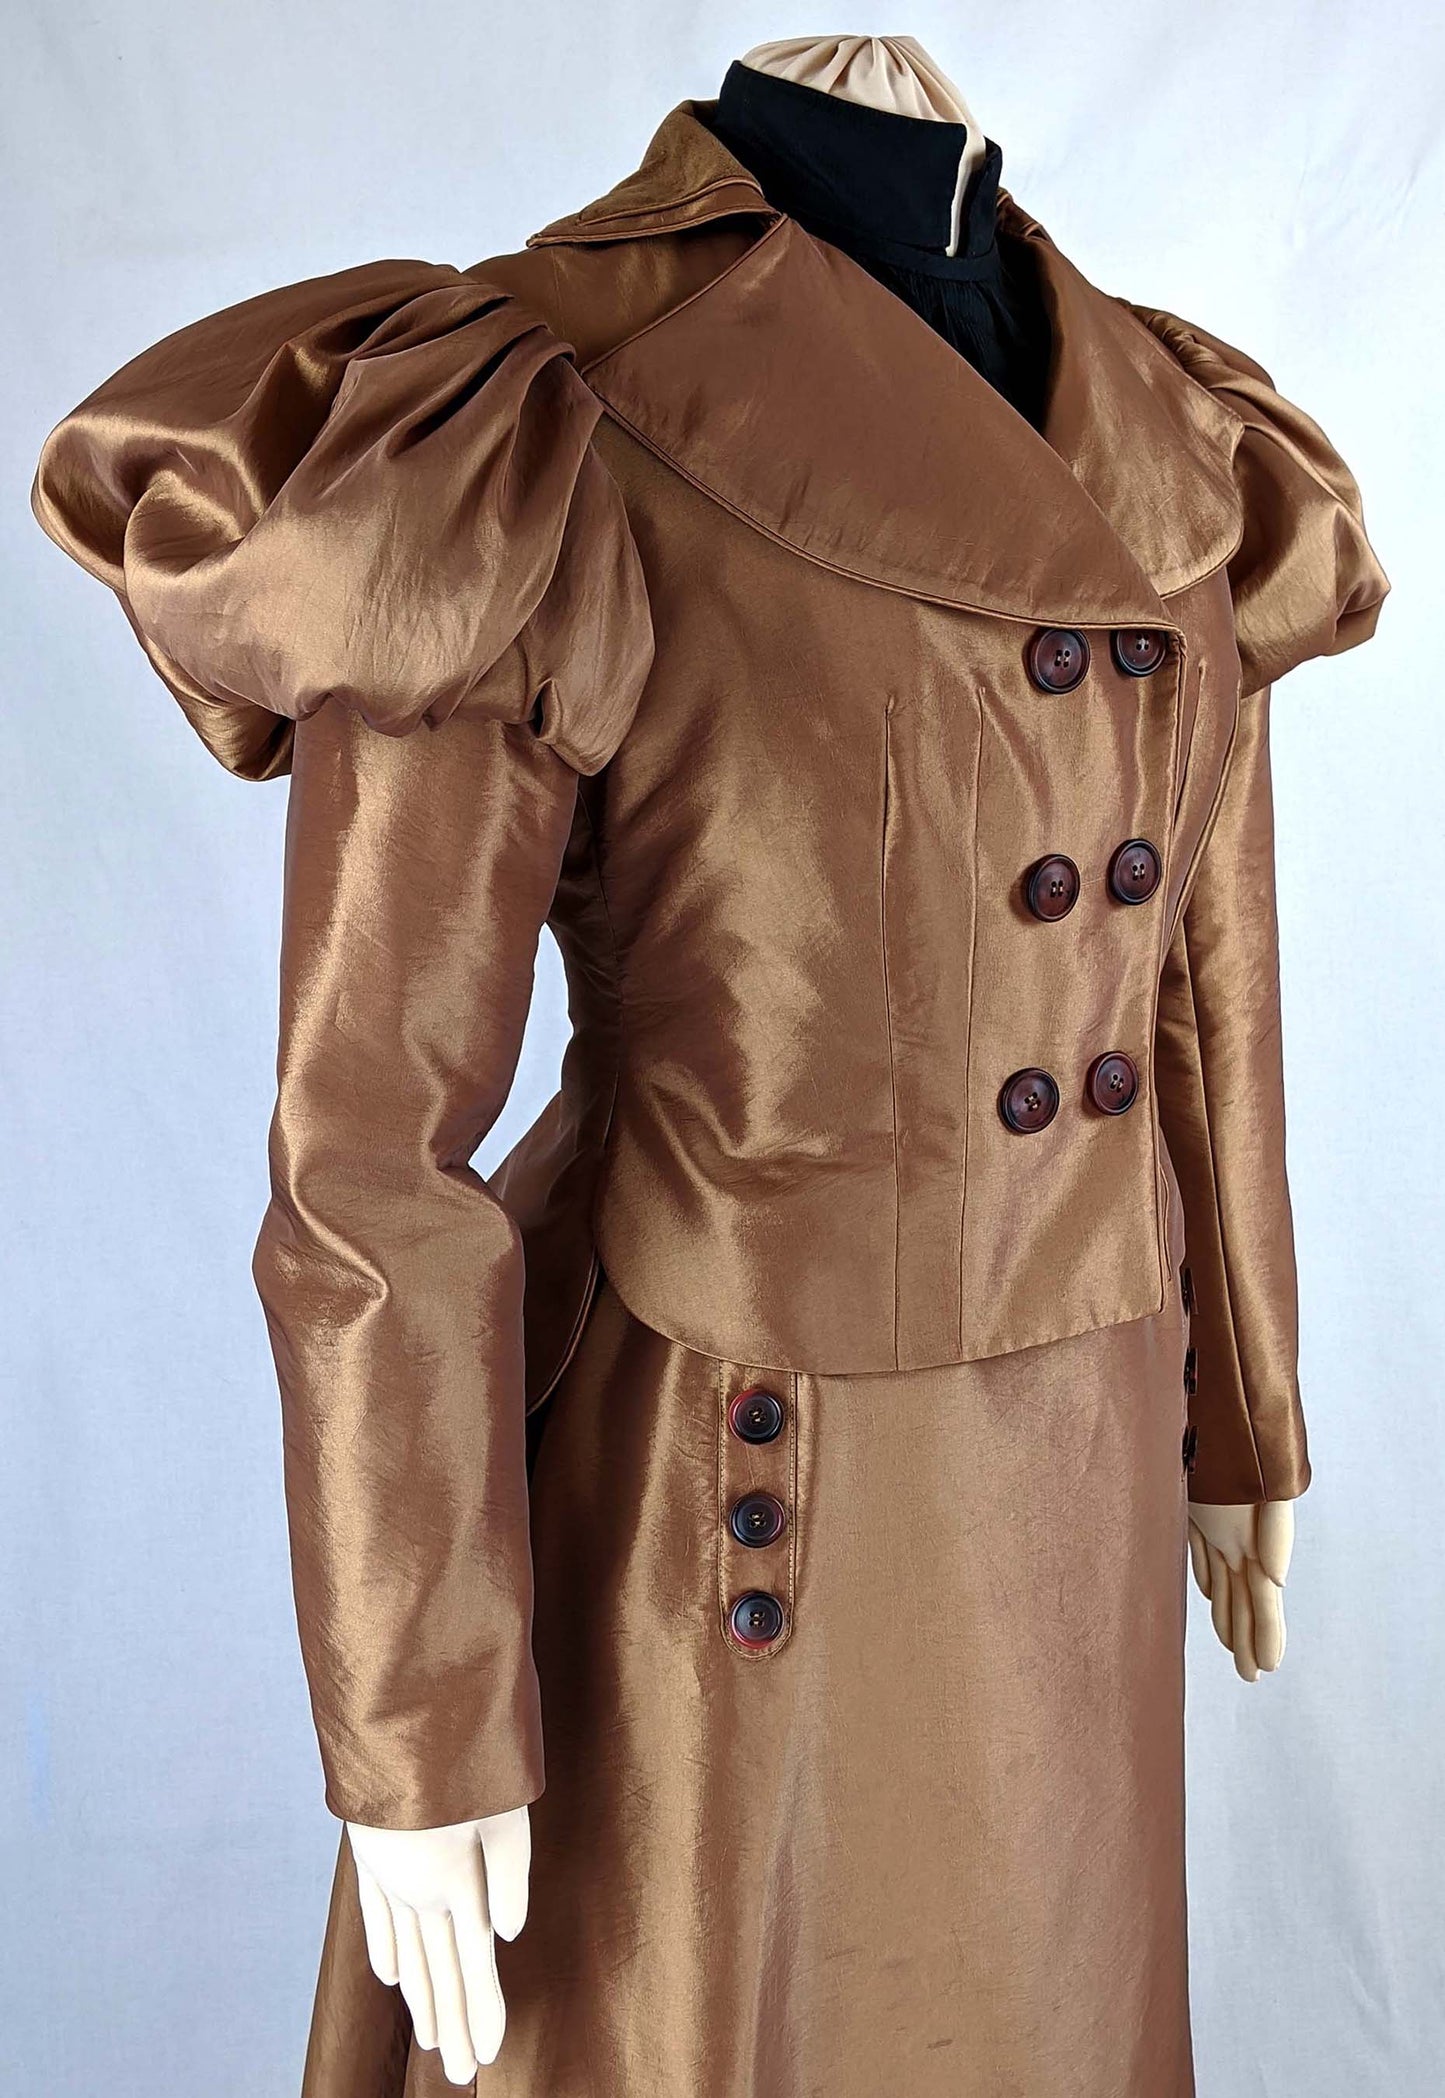 #0120 Edwardianische Jacke mit Puffärmeln um 1890 Schnittmuster Größe EU 34-56 Papierschnittmuster